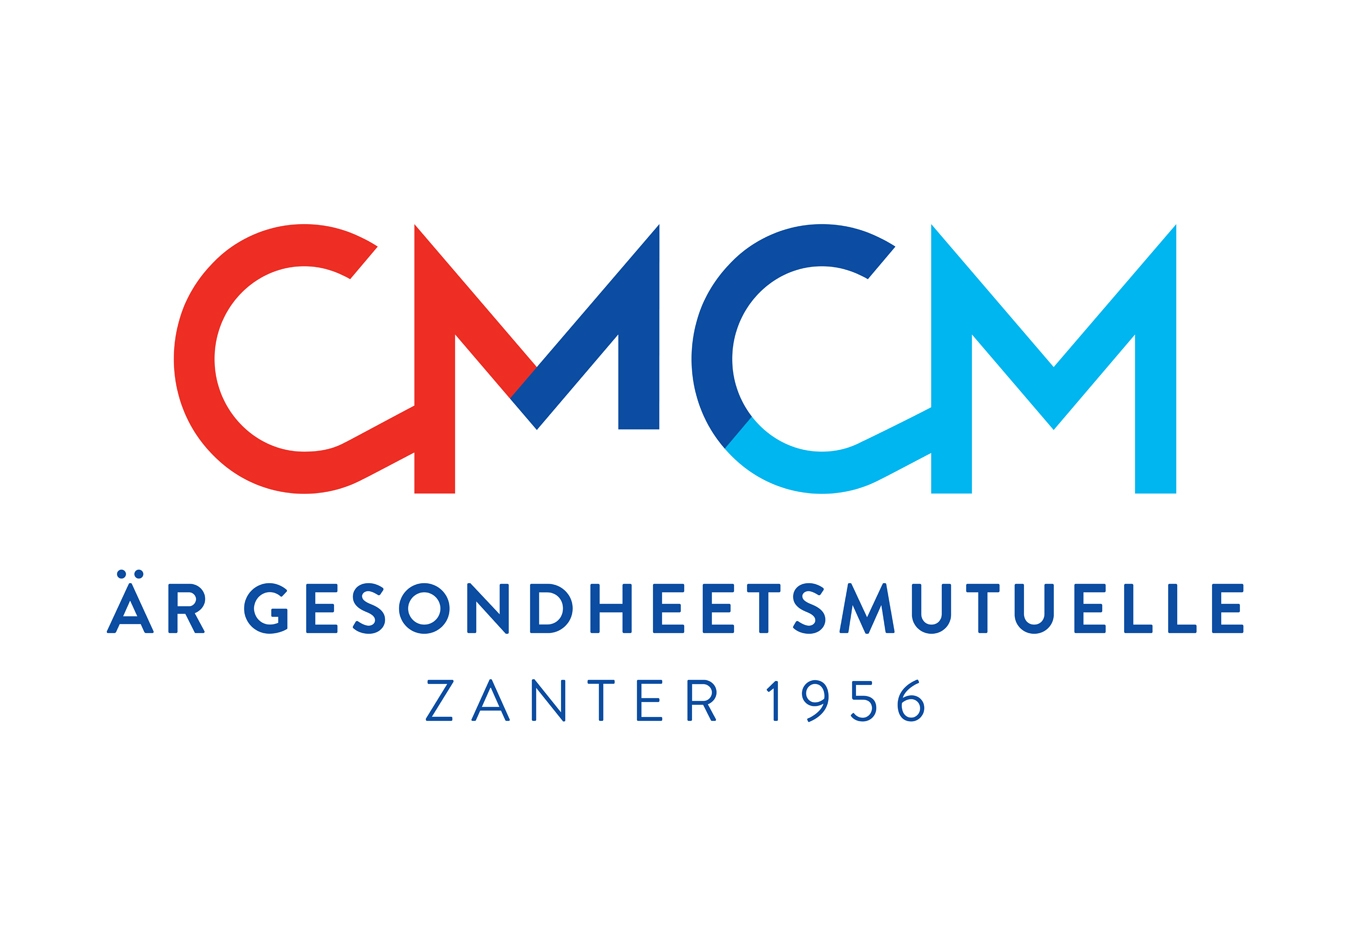 Cmcm Logo 2021